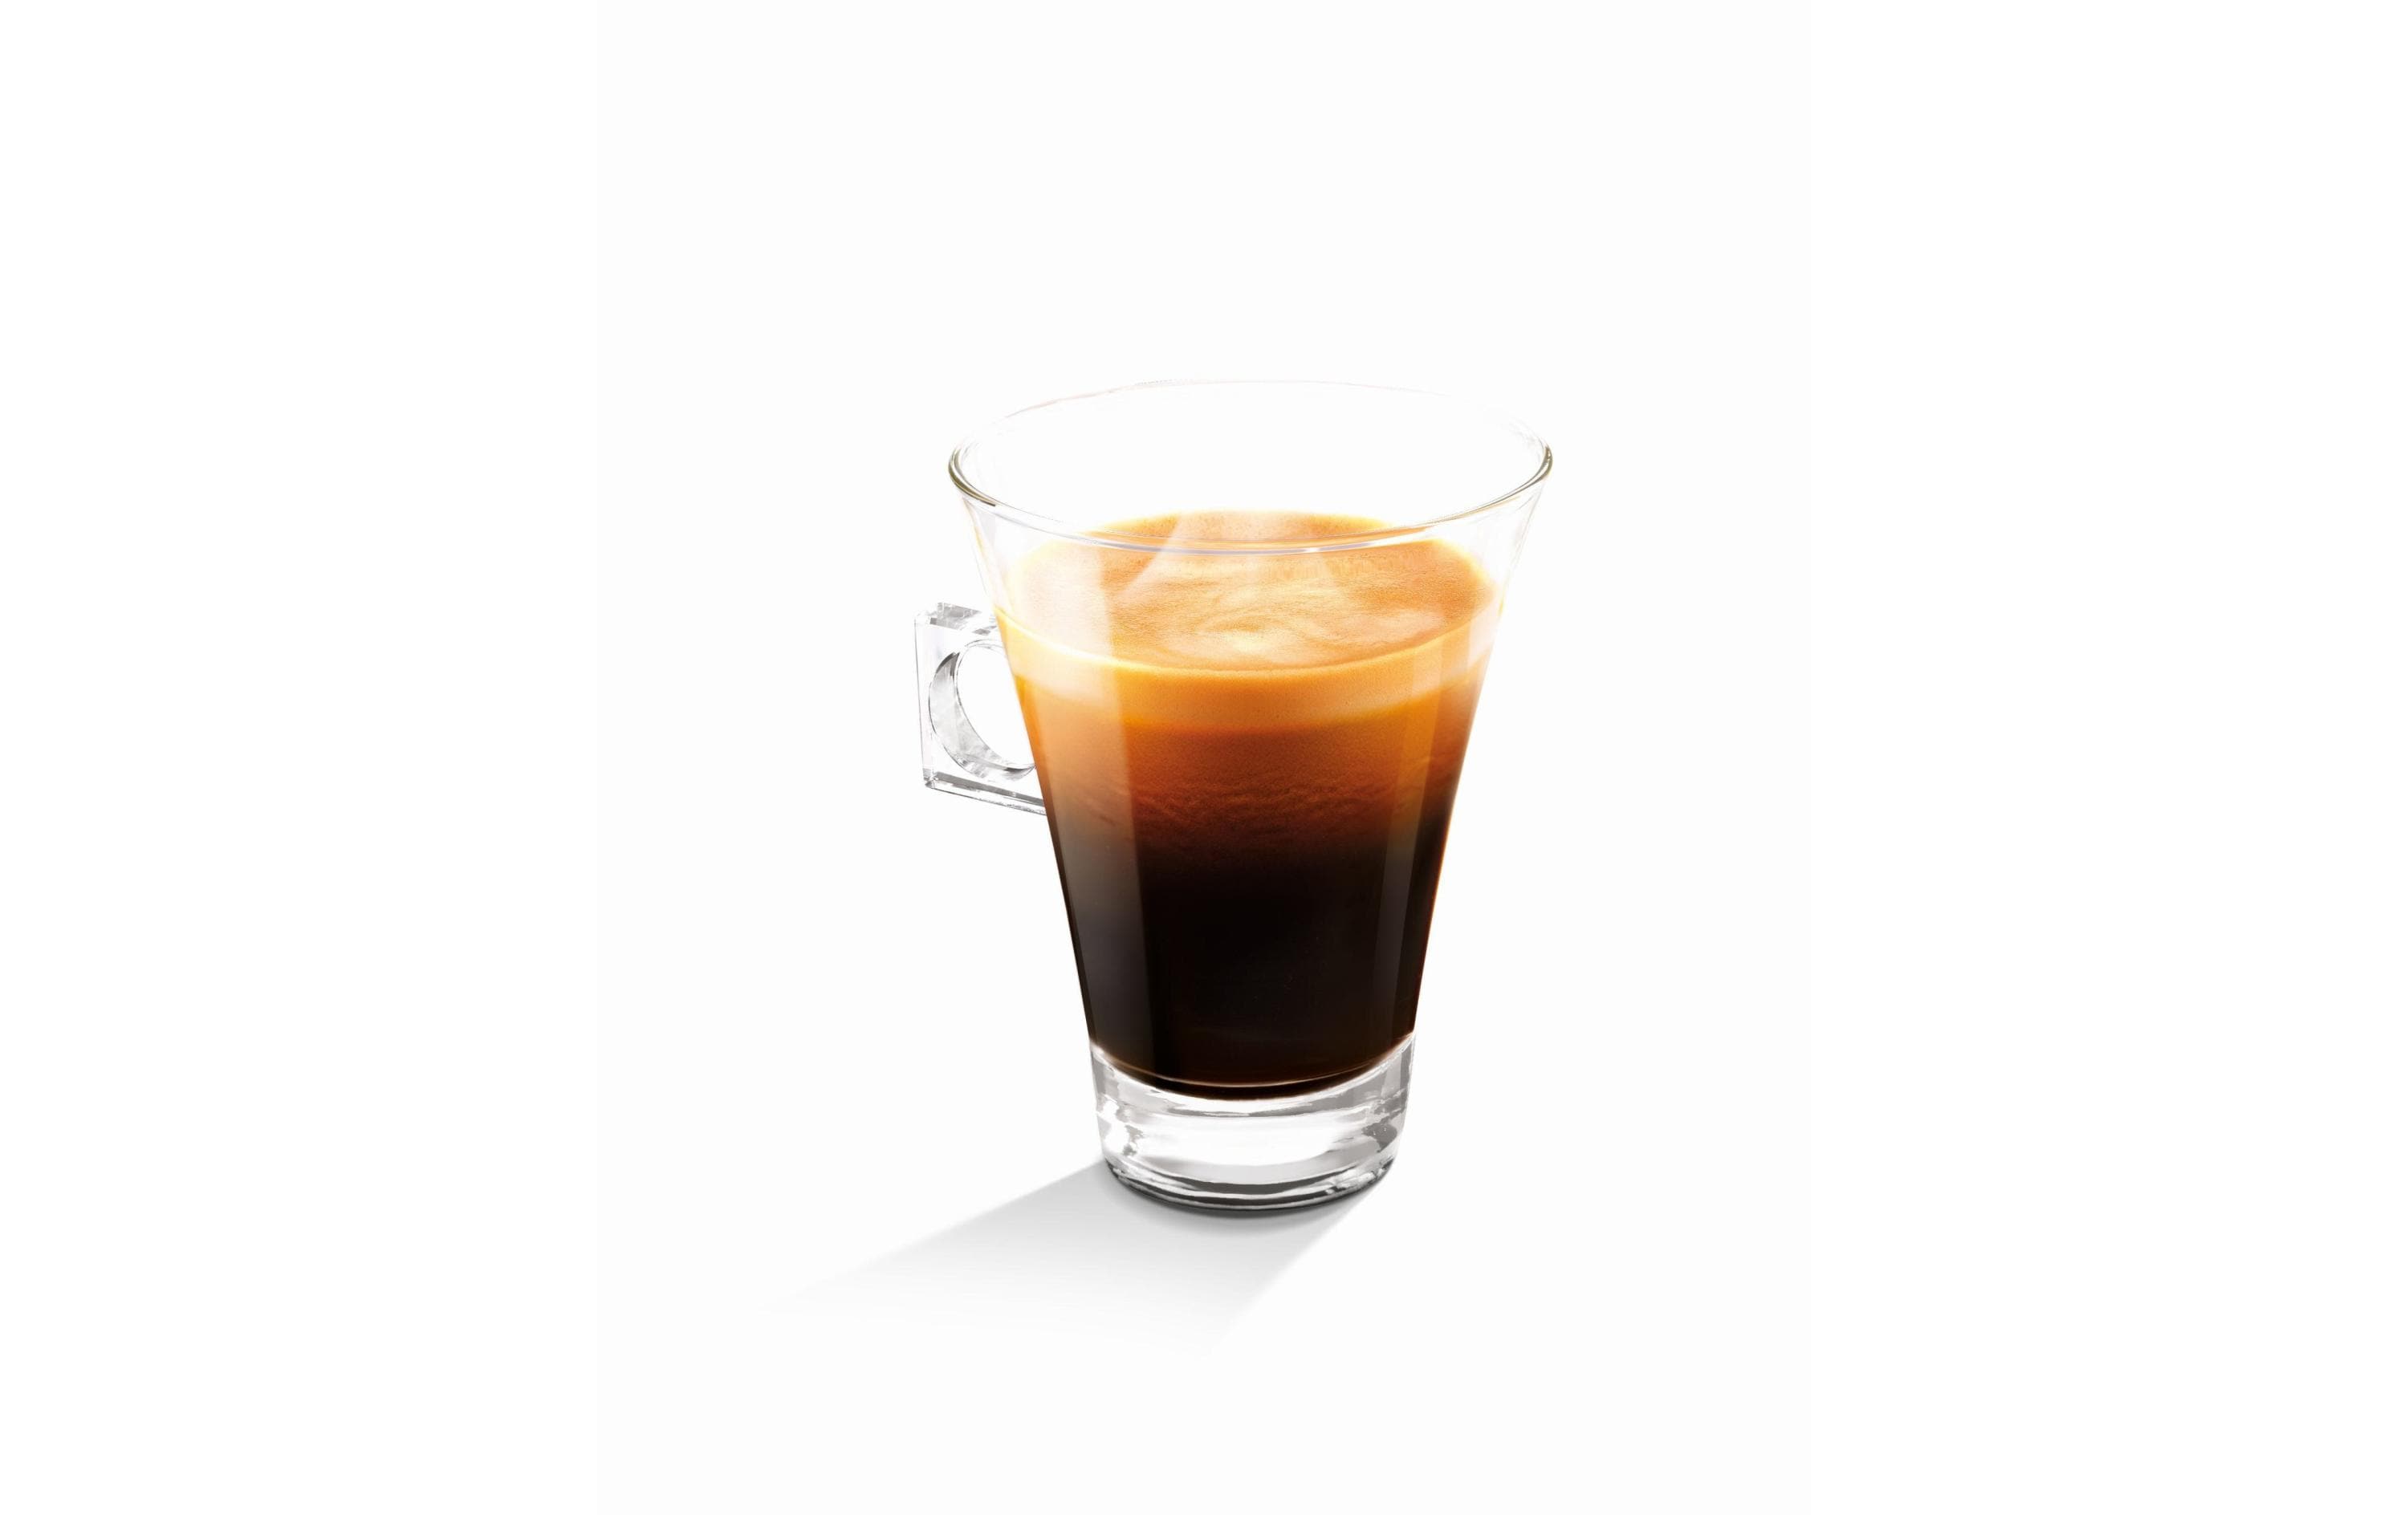 Nescafé Kaffeekapseln Dolce Gusto Lungo 30 Stück